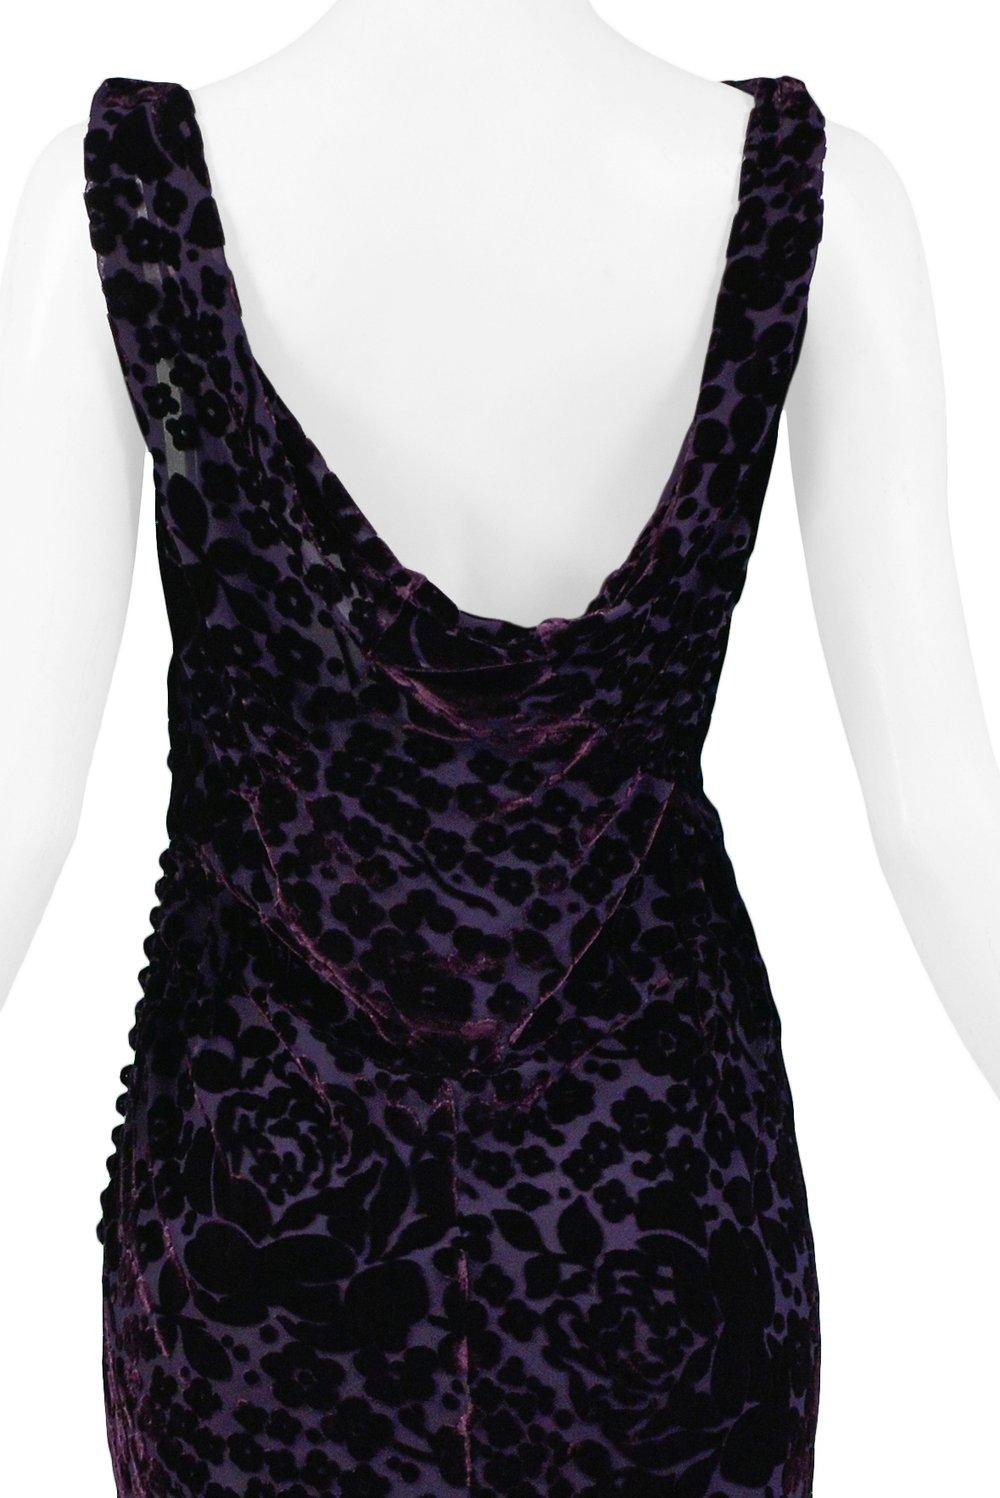 John Galliano Purple & Black Floral Devore Evening Gown 1